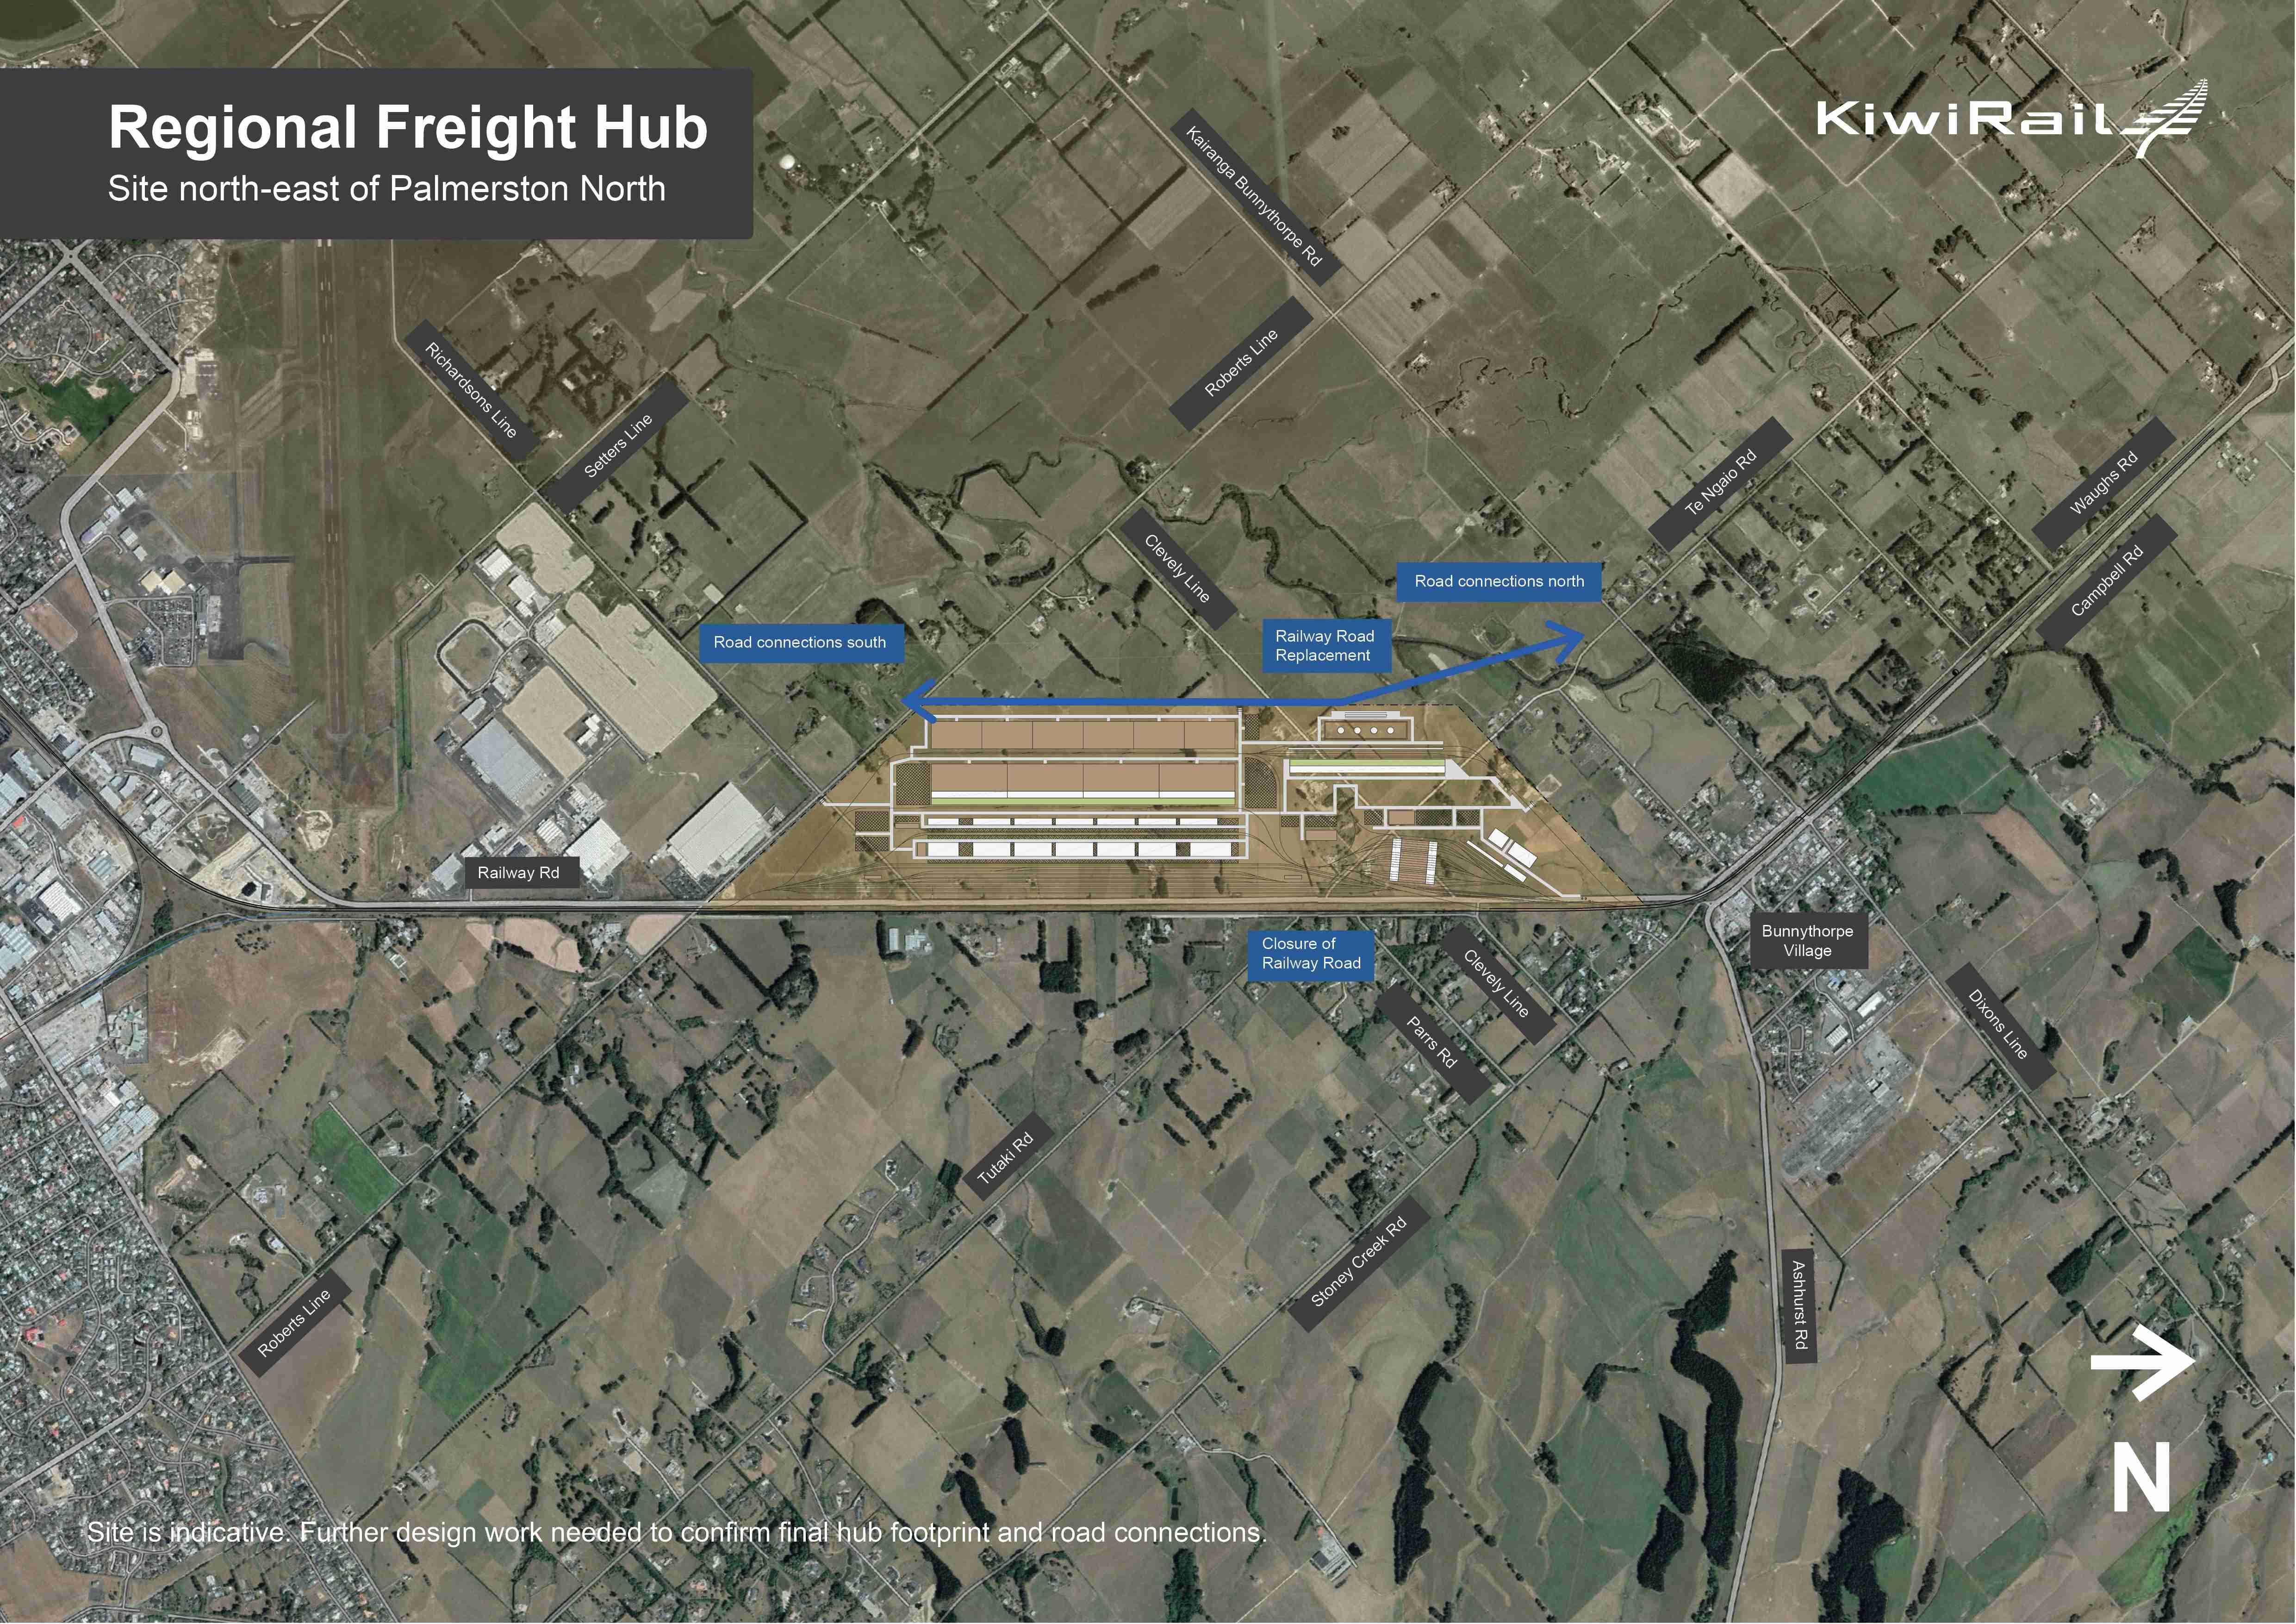 200702 Regional Freight Hub footprint image